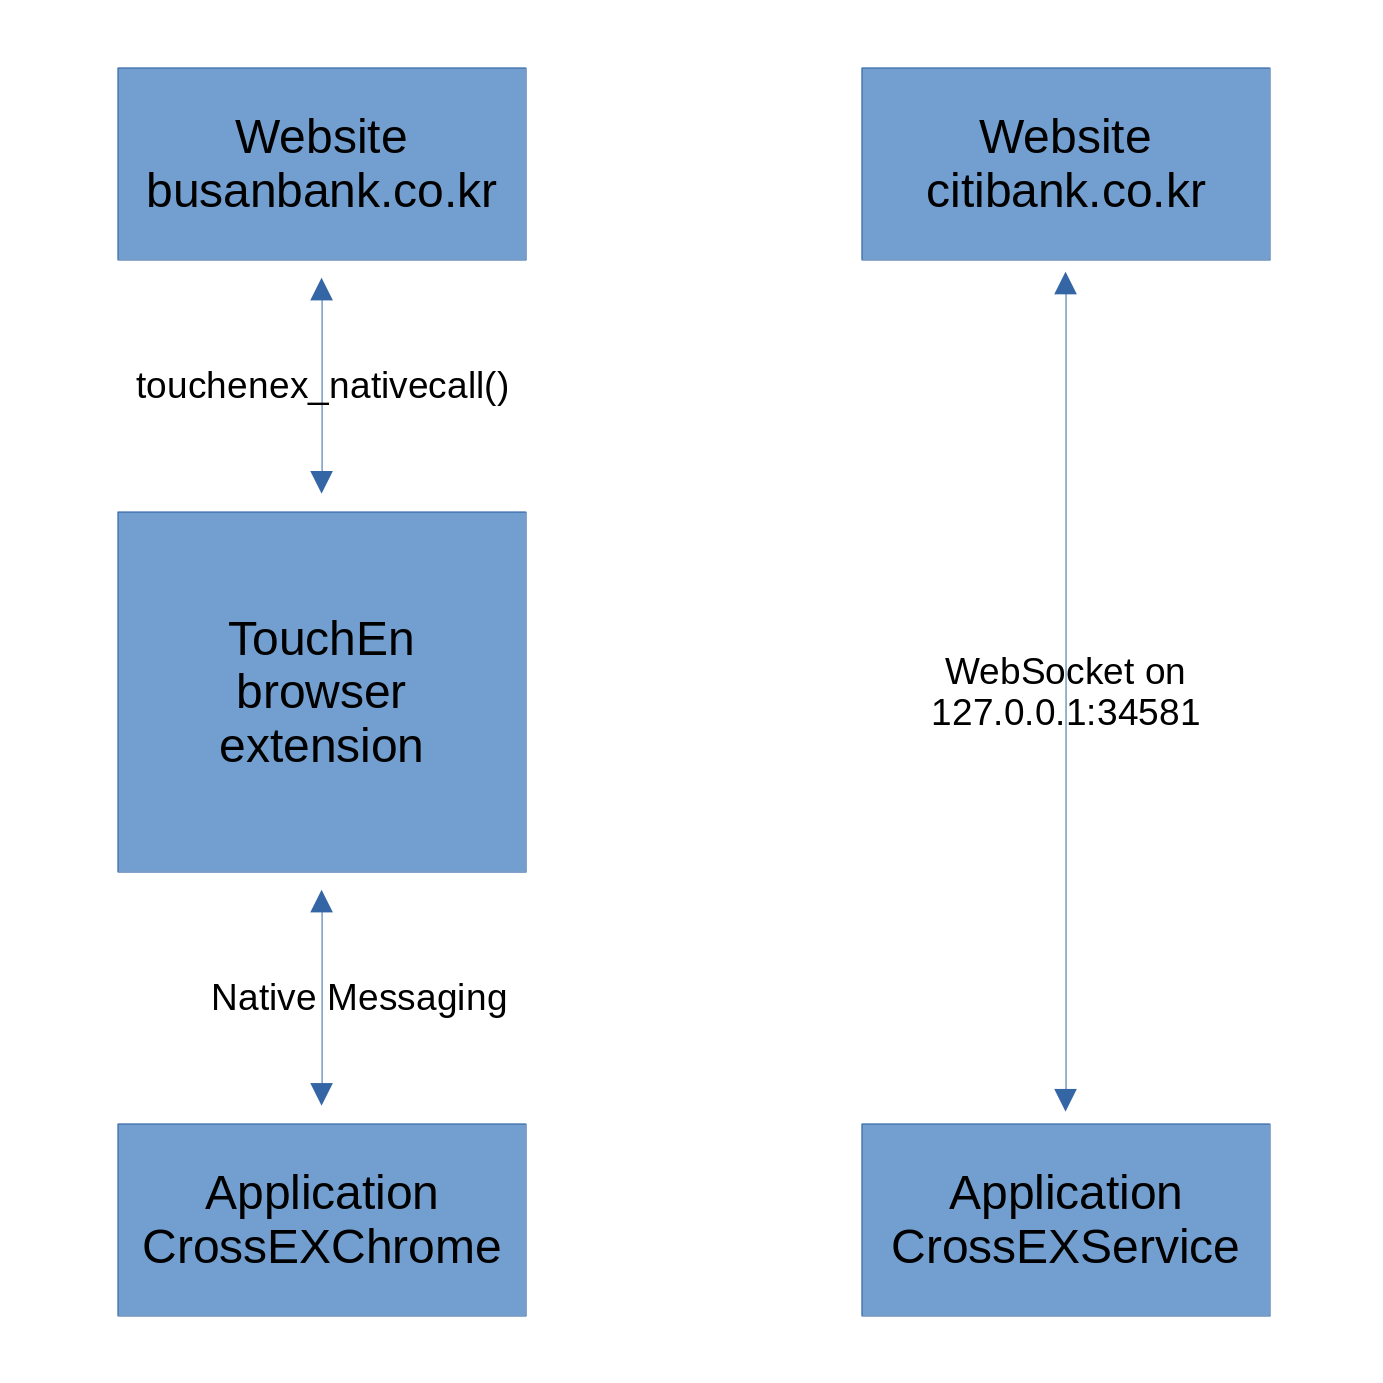 busanbank.co.kr 웹사이트는 touchenex_nativecall()을 사용해서 TouchEn 브라우저 확장 프로그램과 통신하는 것으로 보인다. 이 확장 프로그램은 Native Messaging을 통하여 CrossEXChrome이라는 애플리케이션과 통신한다. 다른 한편으로 citibank.co.kr 웹사이트는 웹소켓 주소 127.0.0.1:34581을 사용해 CrossEXService 애플리케이션과 직접 통신한다.